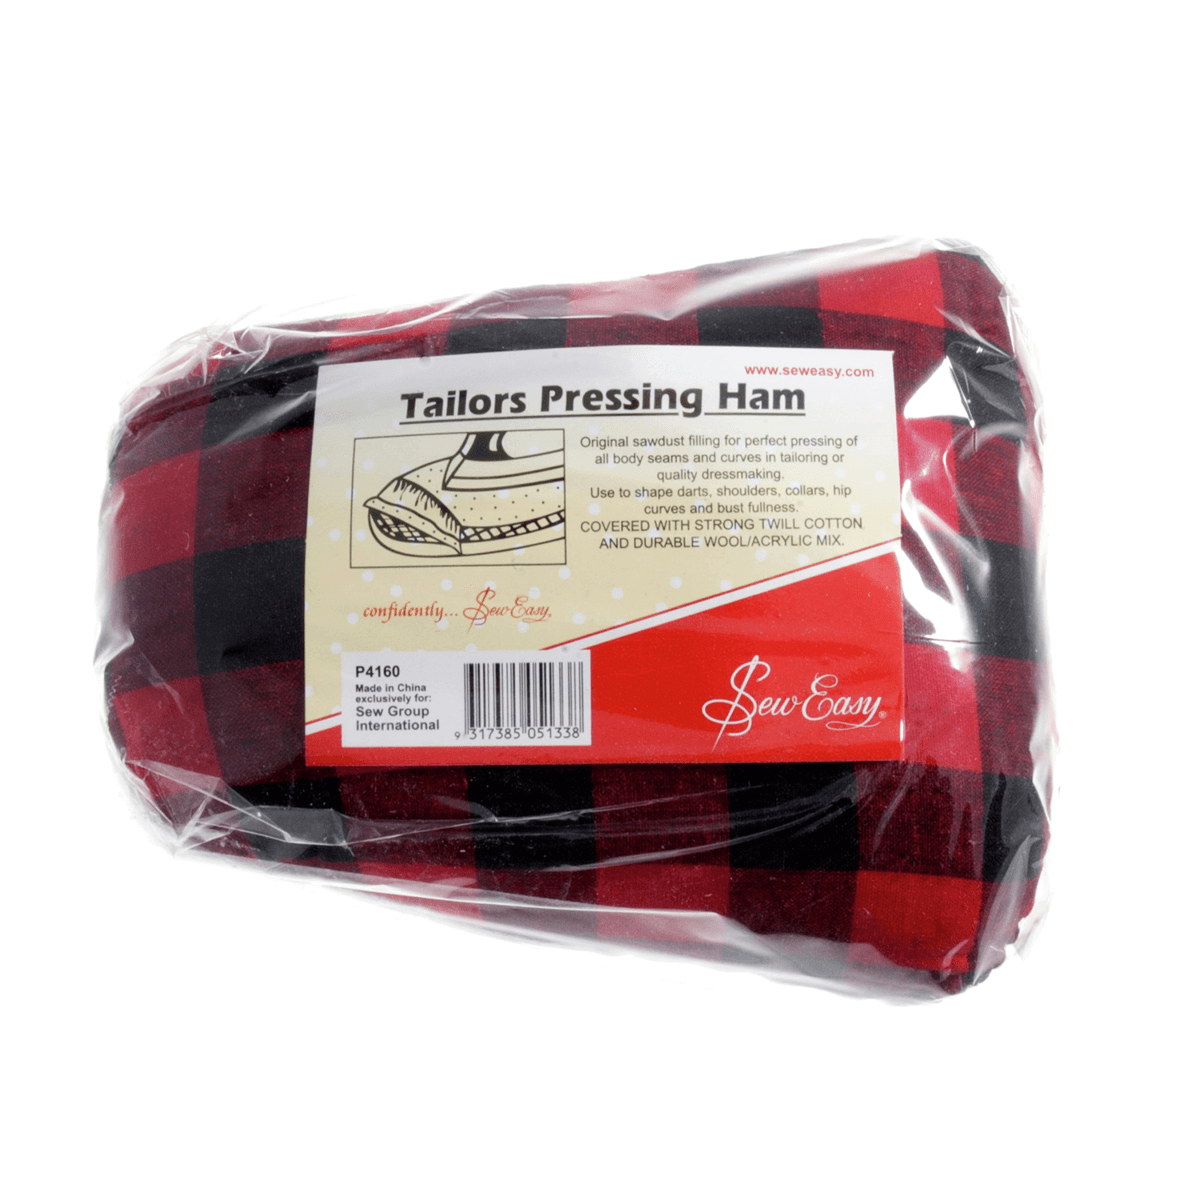 Tailors Pressing Ham Dressmaking Sew Easy